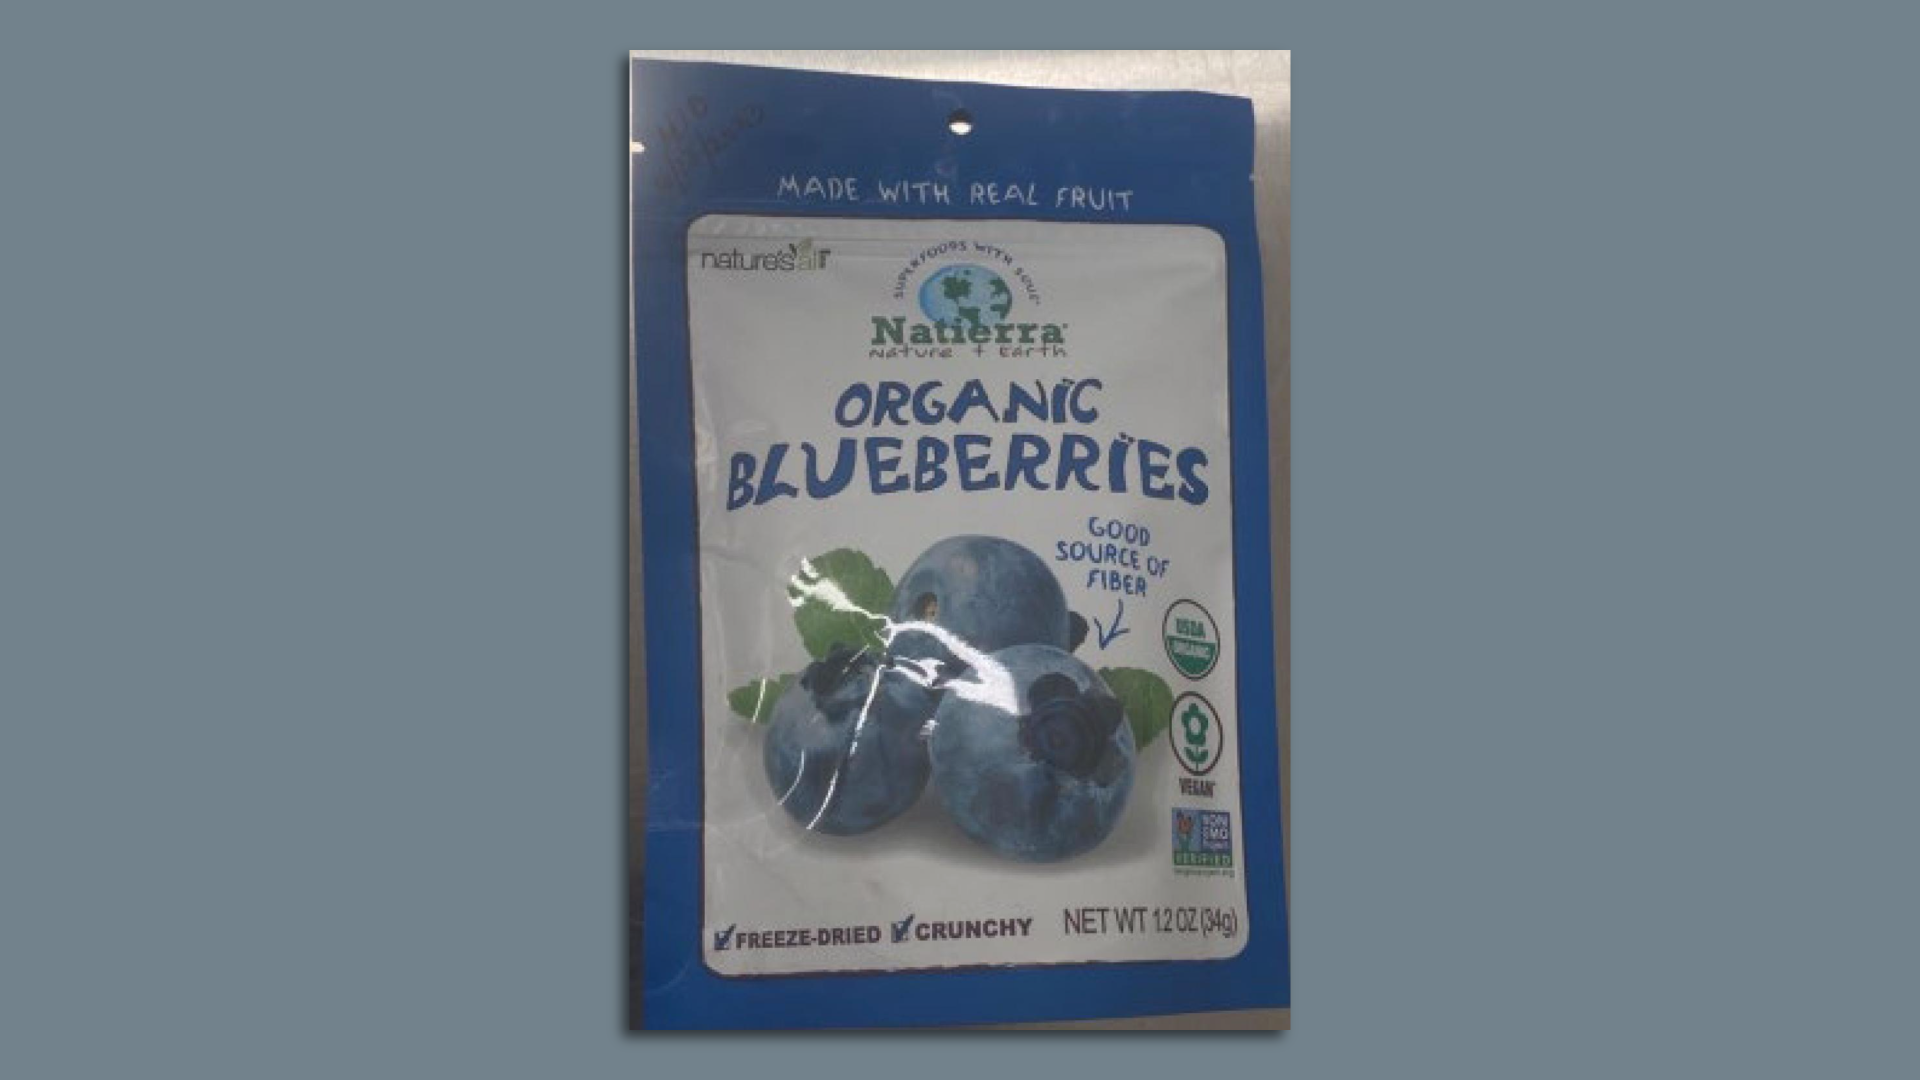 Pouch of Natierra organic blueberries